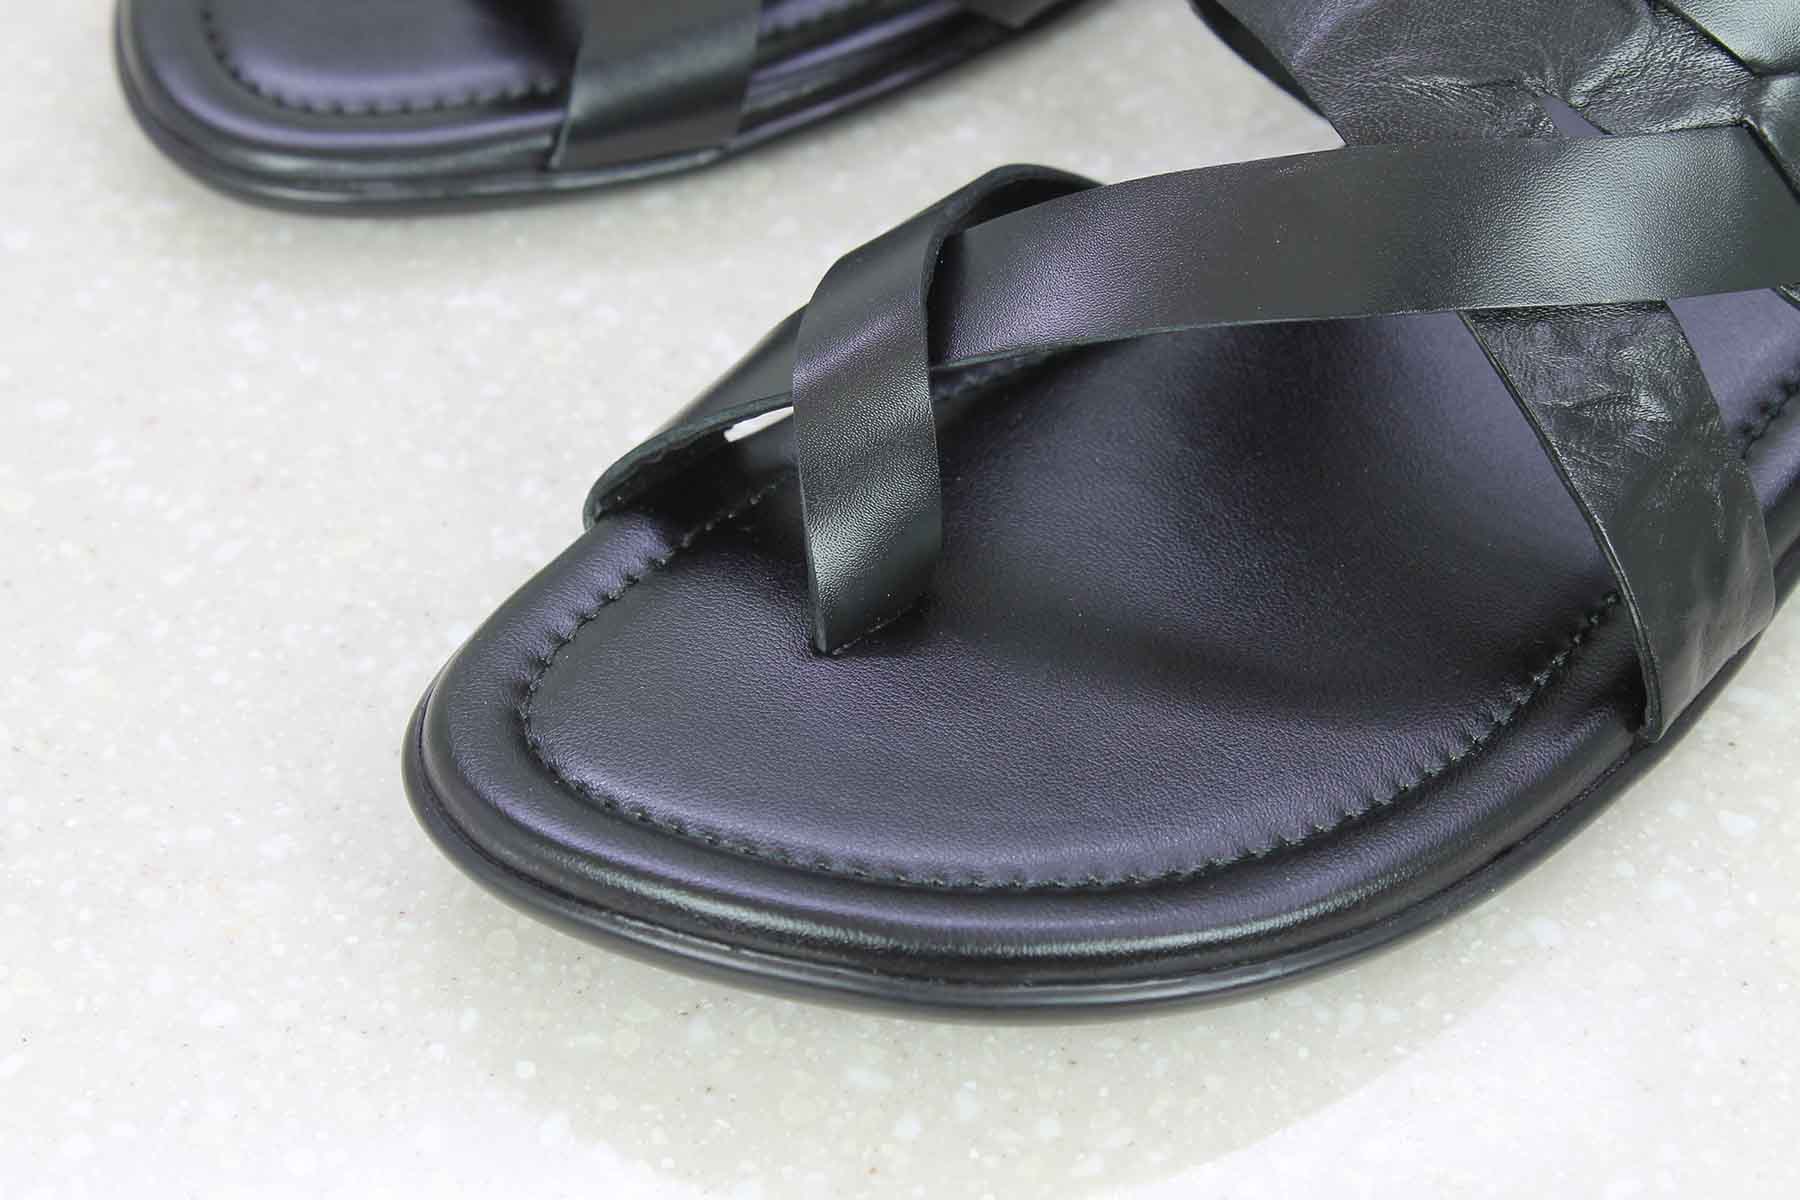 CASUAL SLIPPER - BLACK-Men's Slippers-Inc5 Shoes